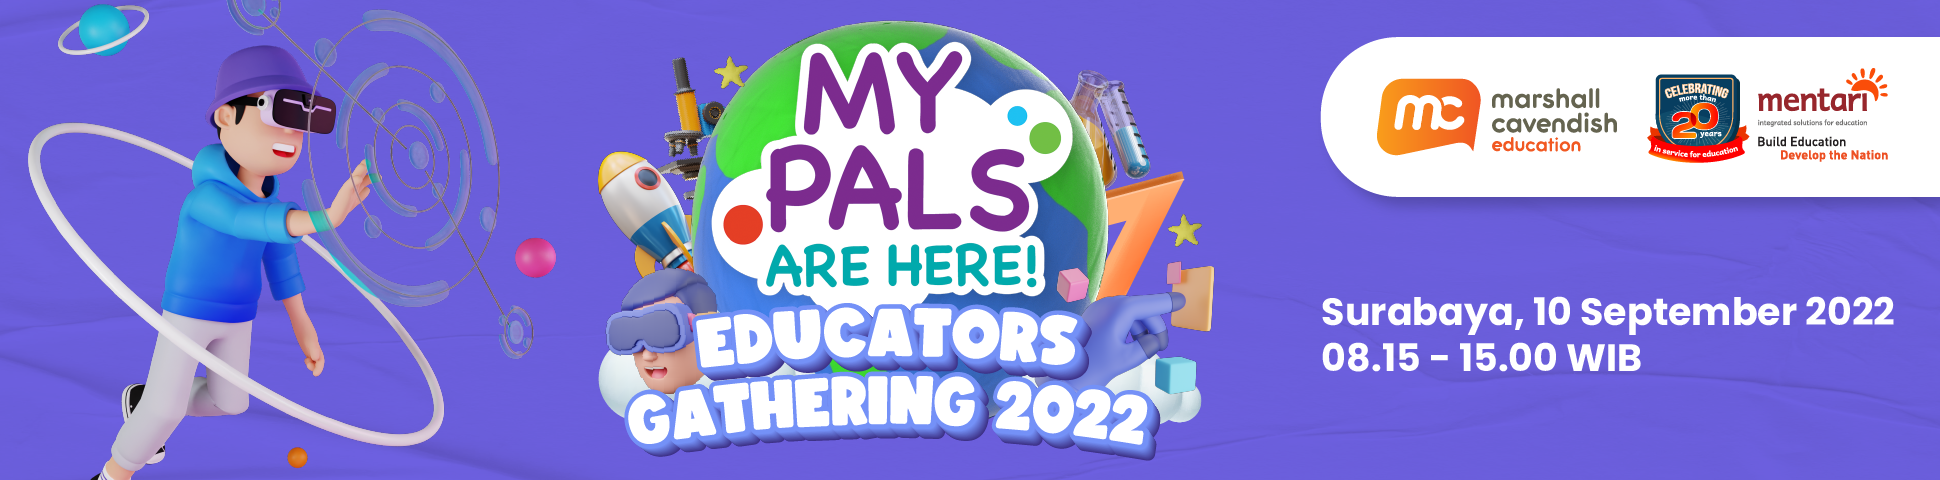 My Pals are Here! Educators Gathering 2022 - Surabaya